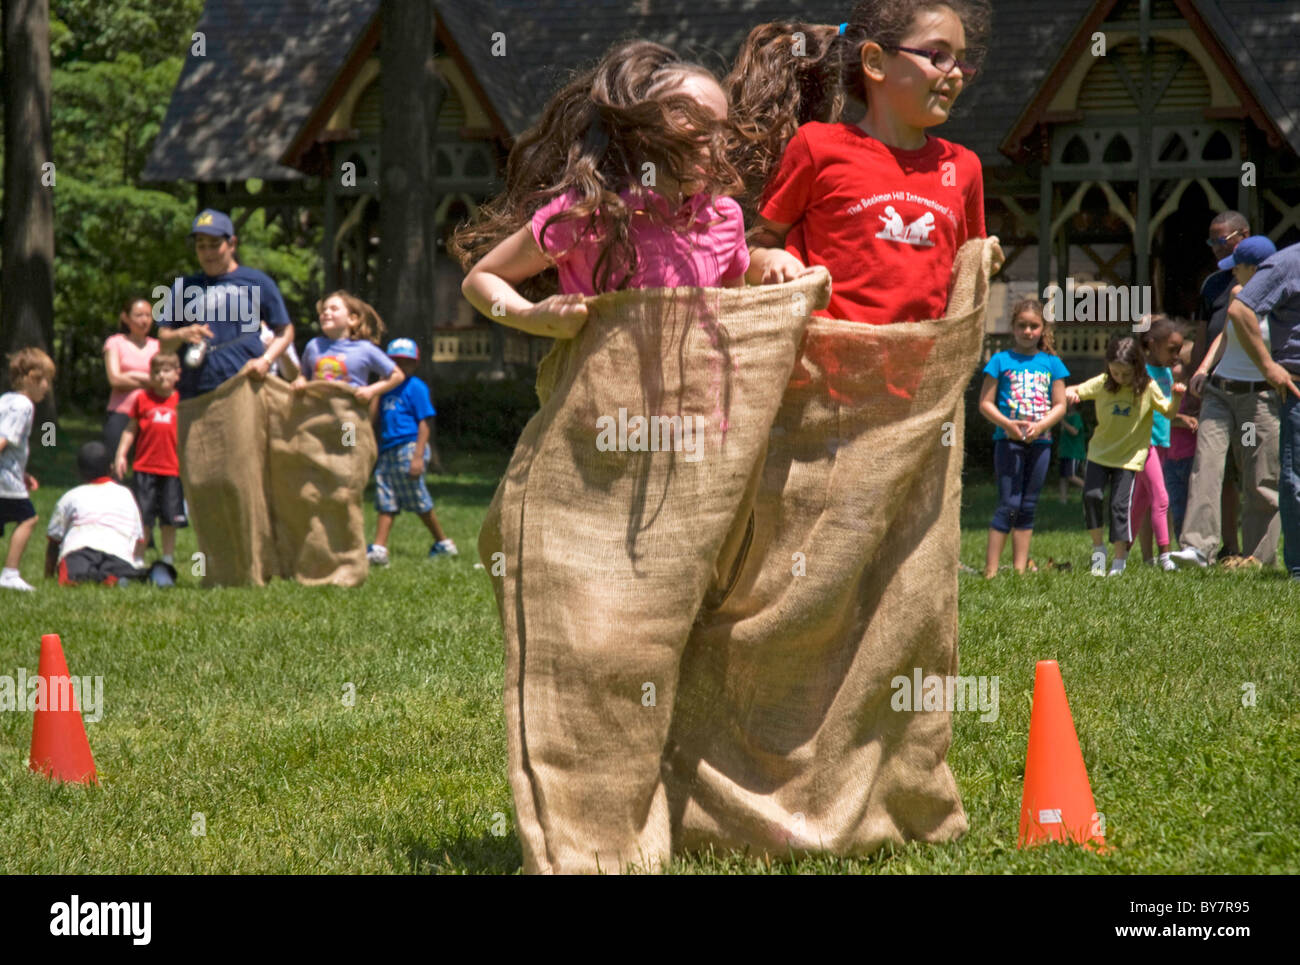 Children having Sack race in the park Stock Photo